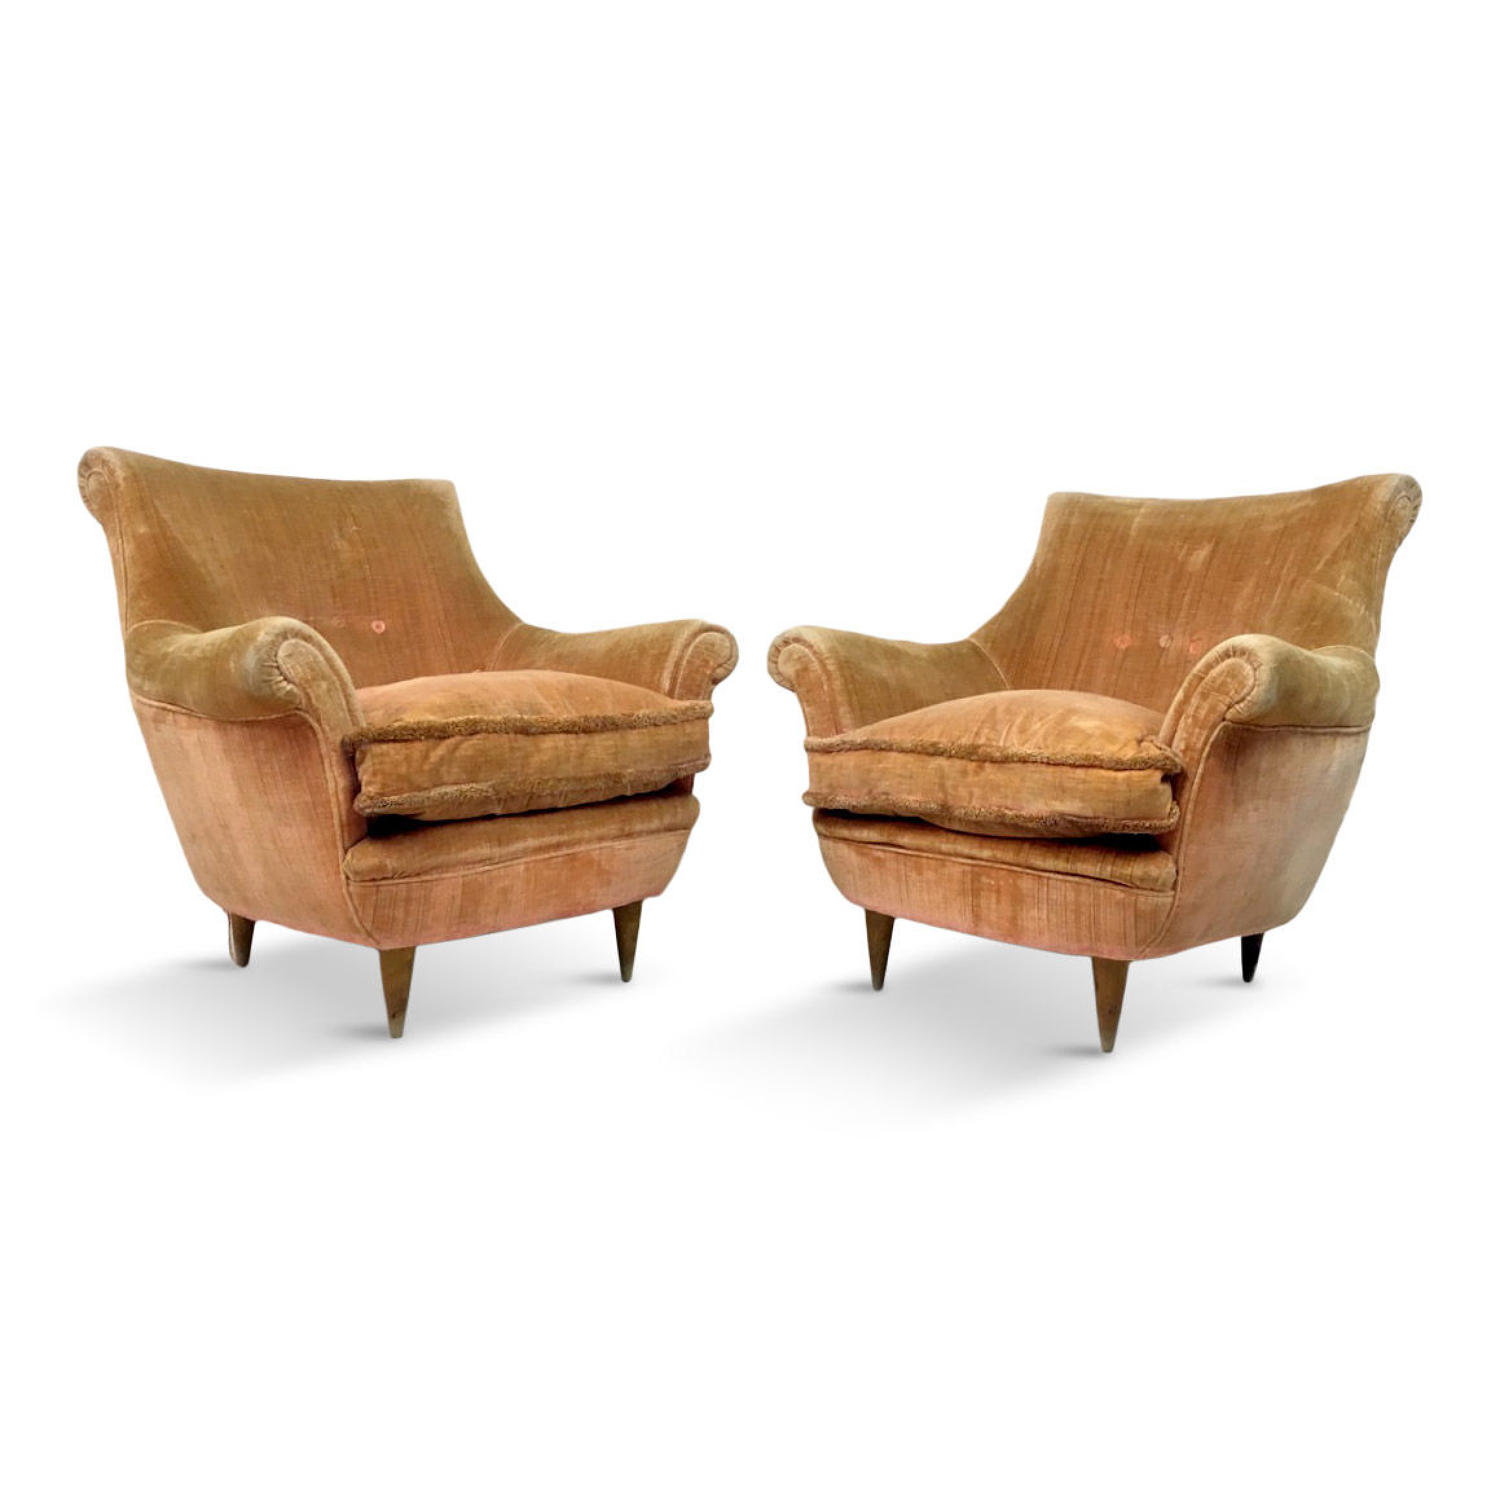 A pair of 1950s Italian armchairs